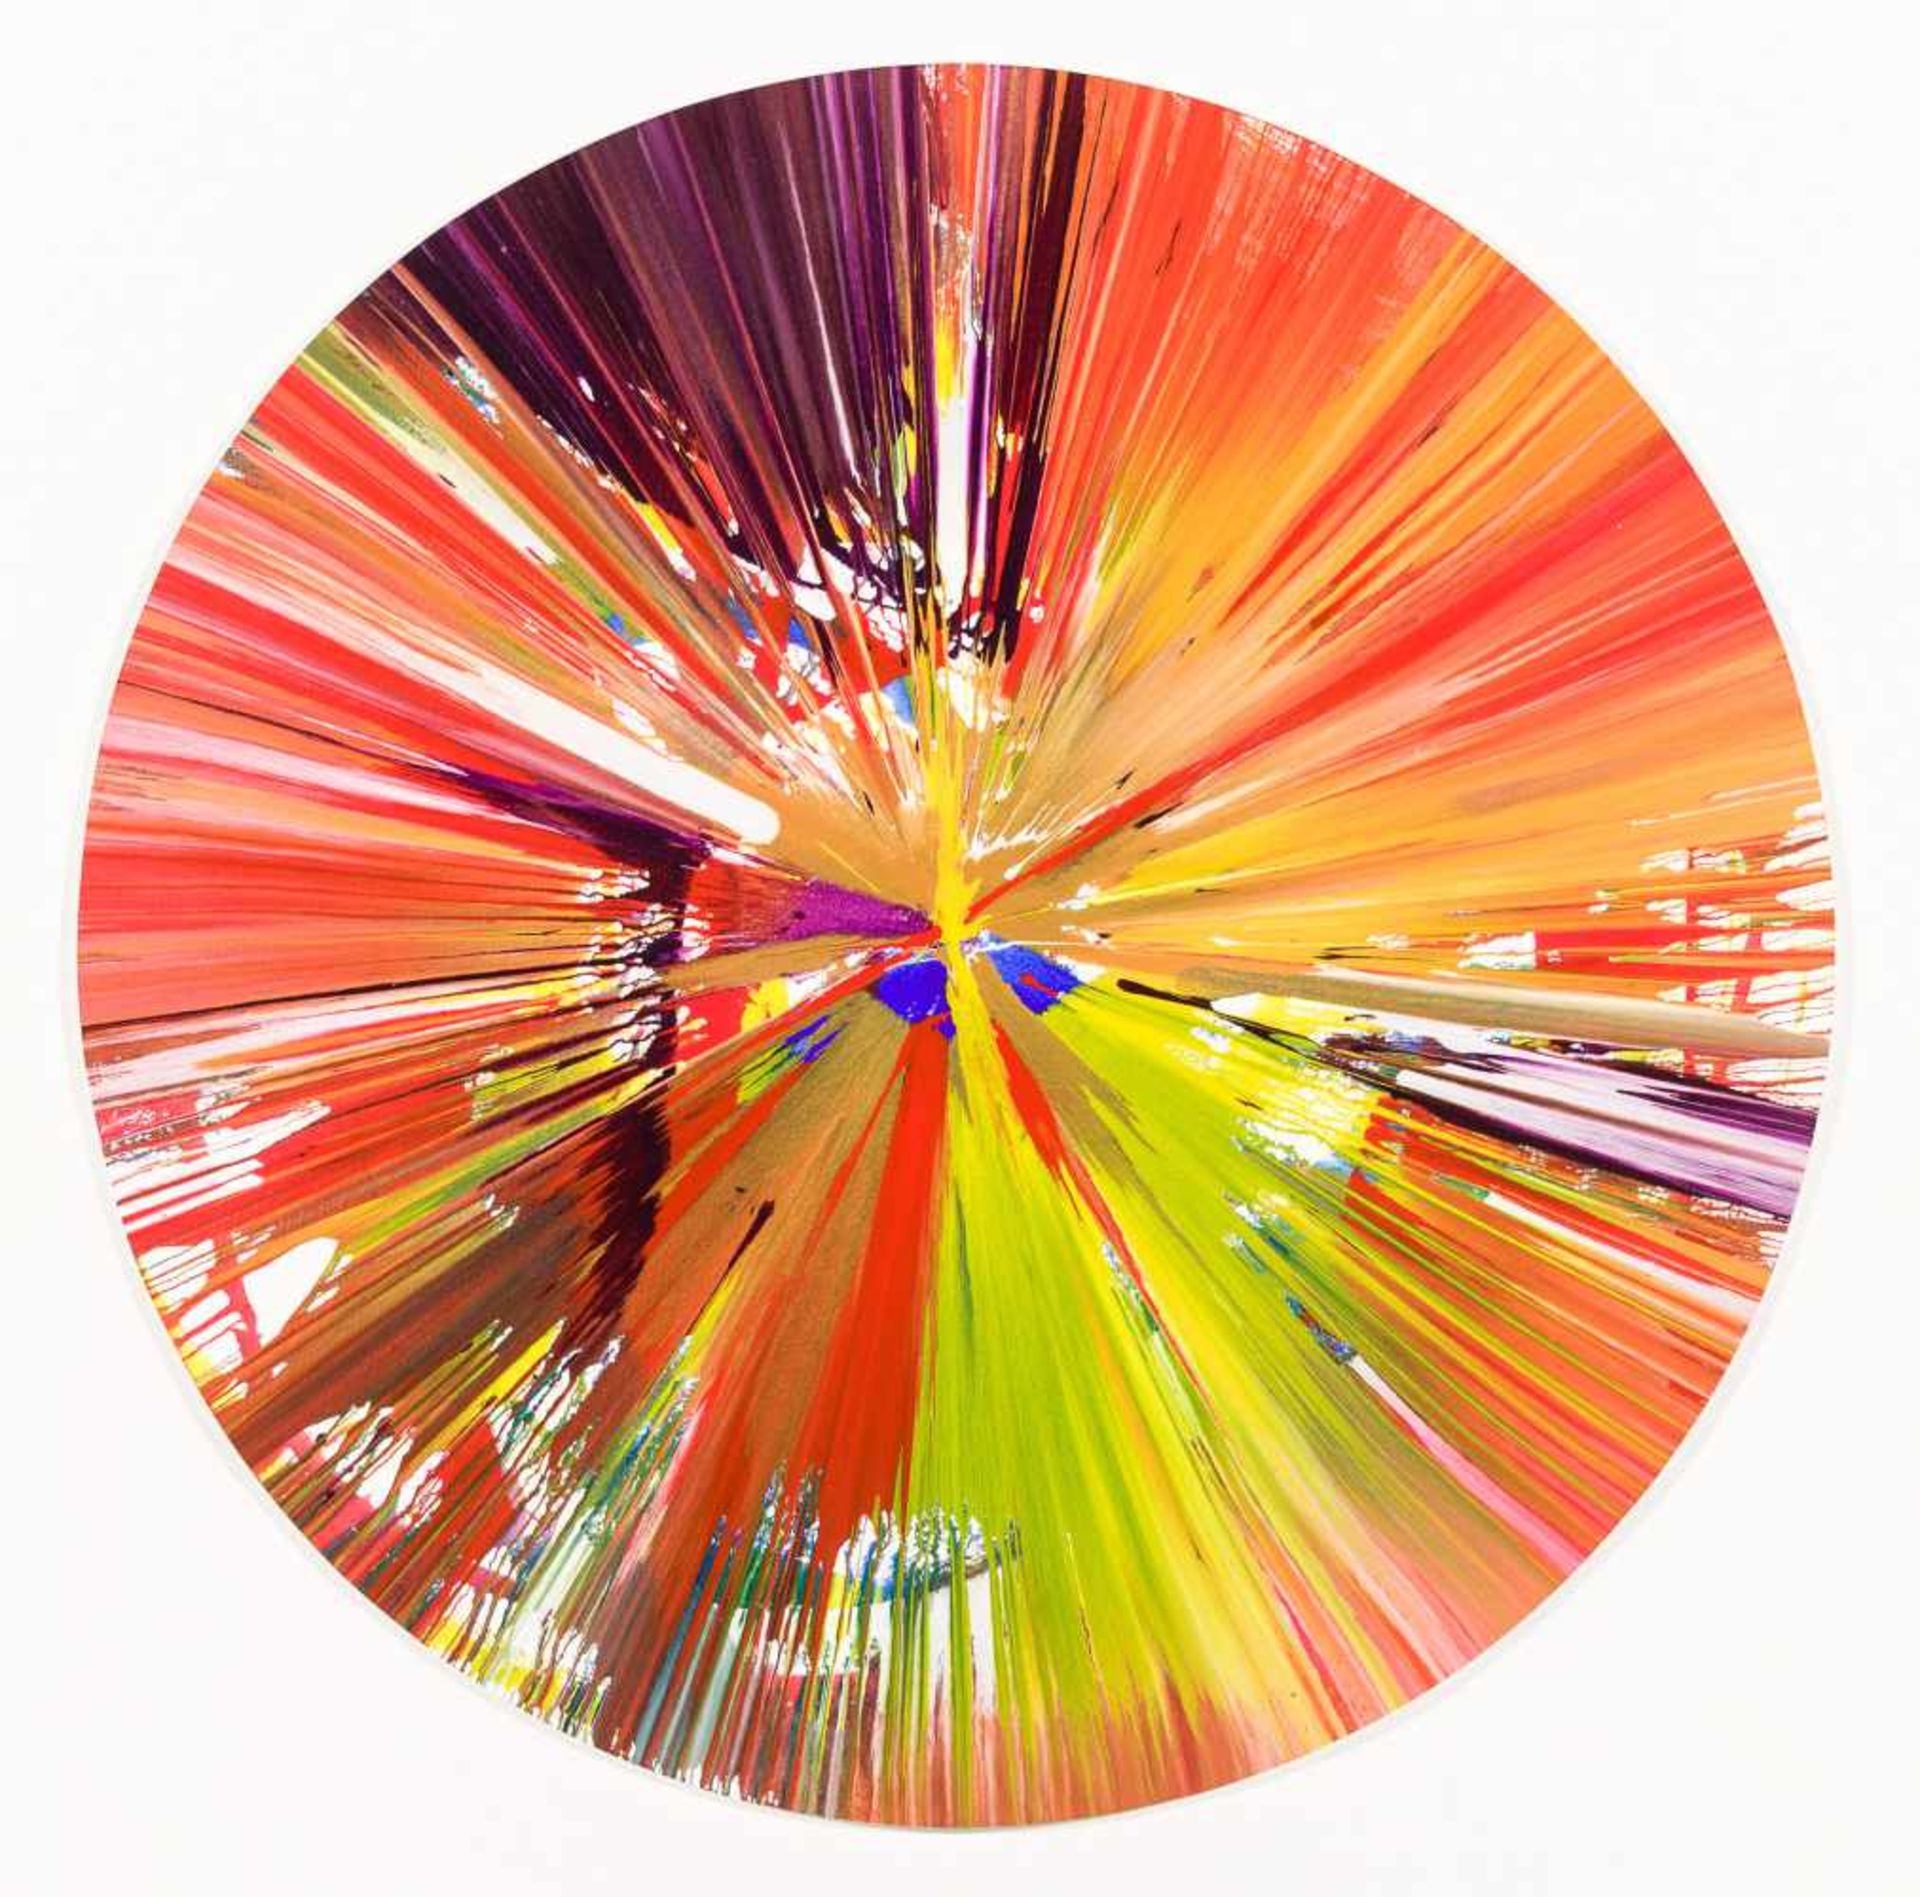 Damien HirstBristol 1965 *Spin PaintingAcryl und Metalliclack auf Papier / acrylic and metallic